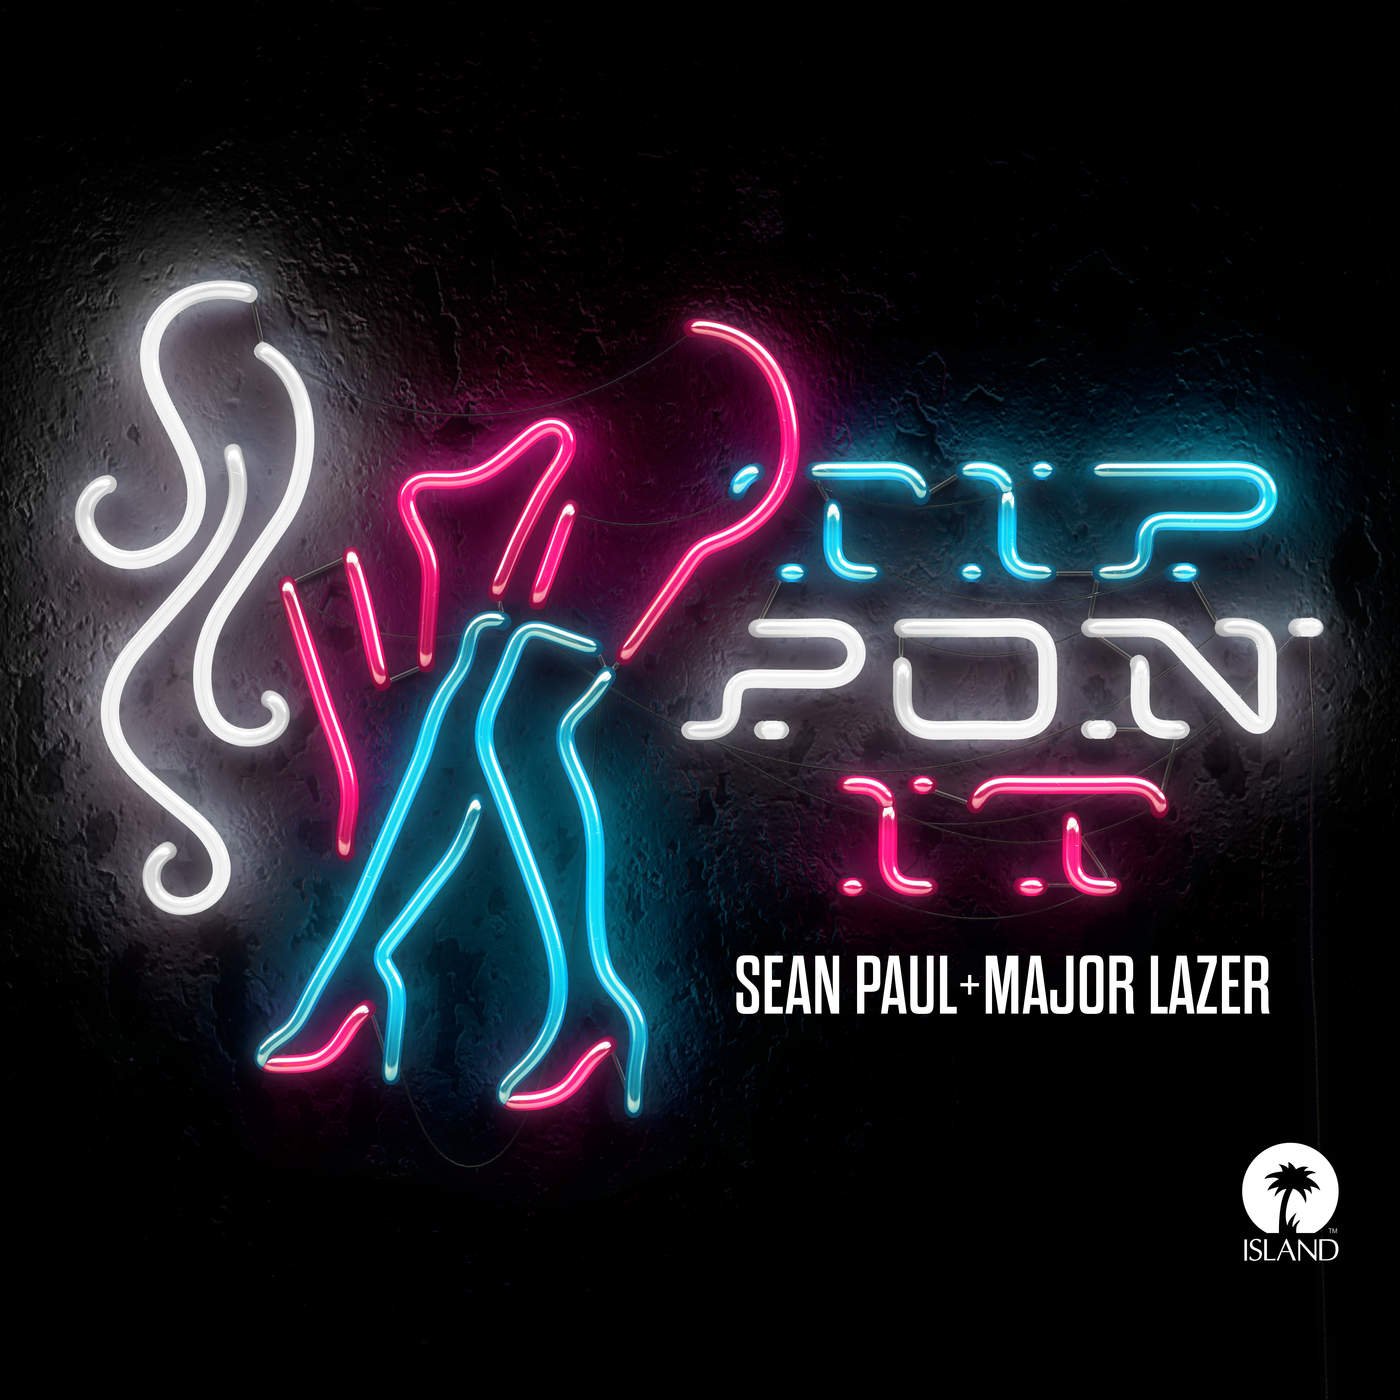 Sean paul dance. Sean Paul Tip Pon it. Sean Paul & Major Lazer. Tip Pon it. Sean Paul Major Lazer Tip Pon it.